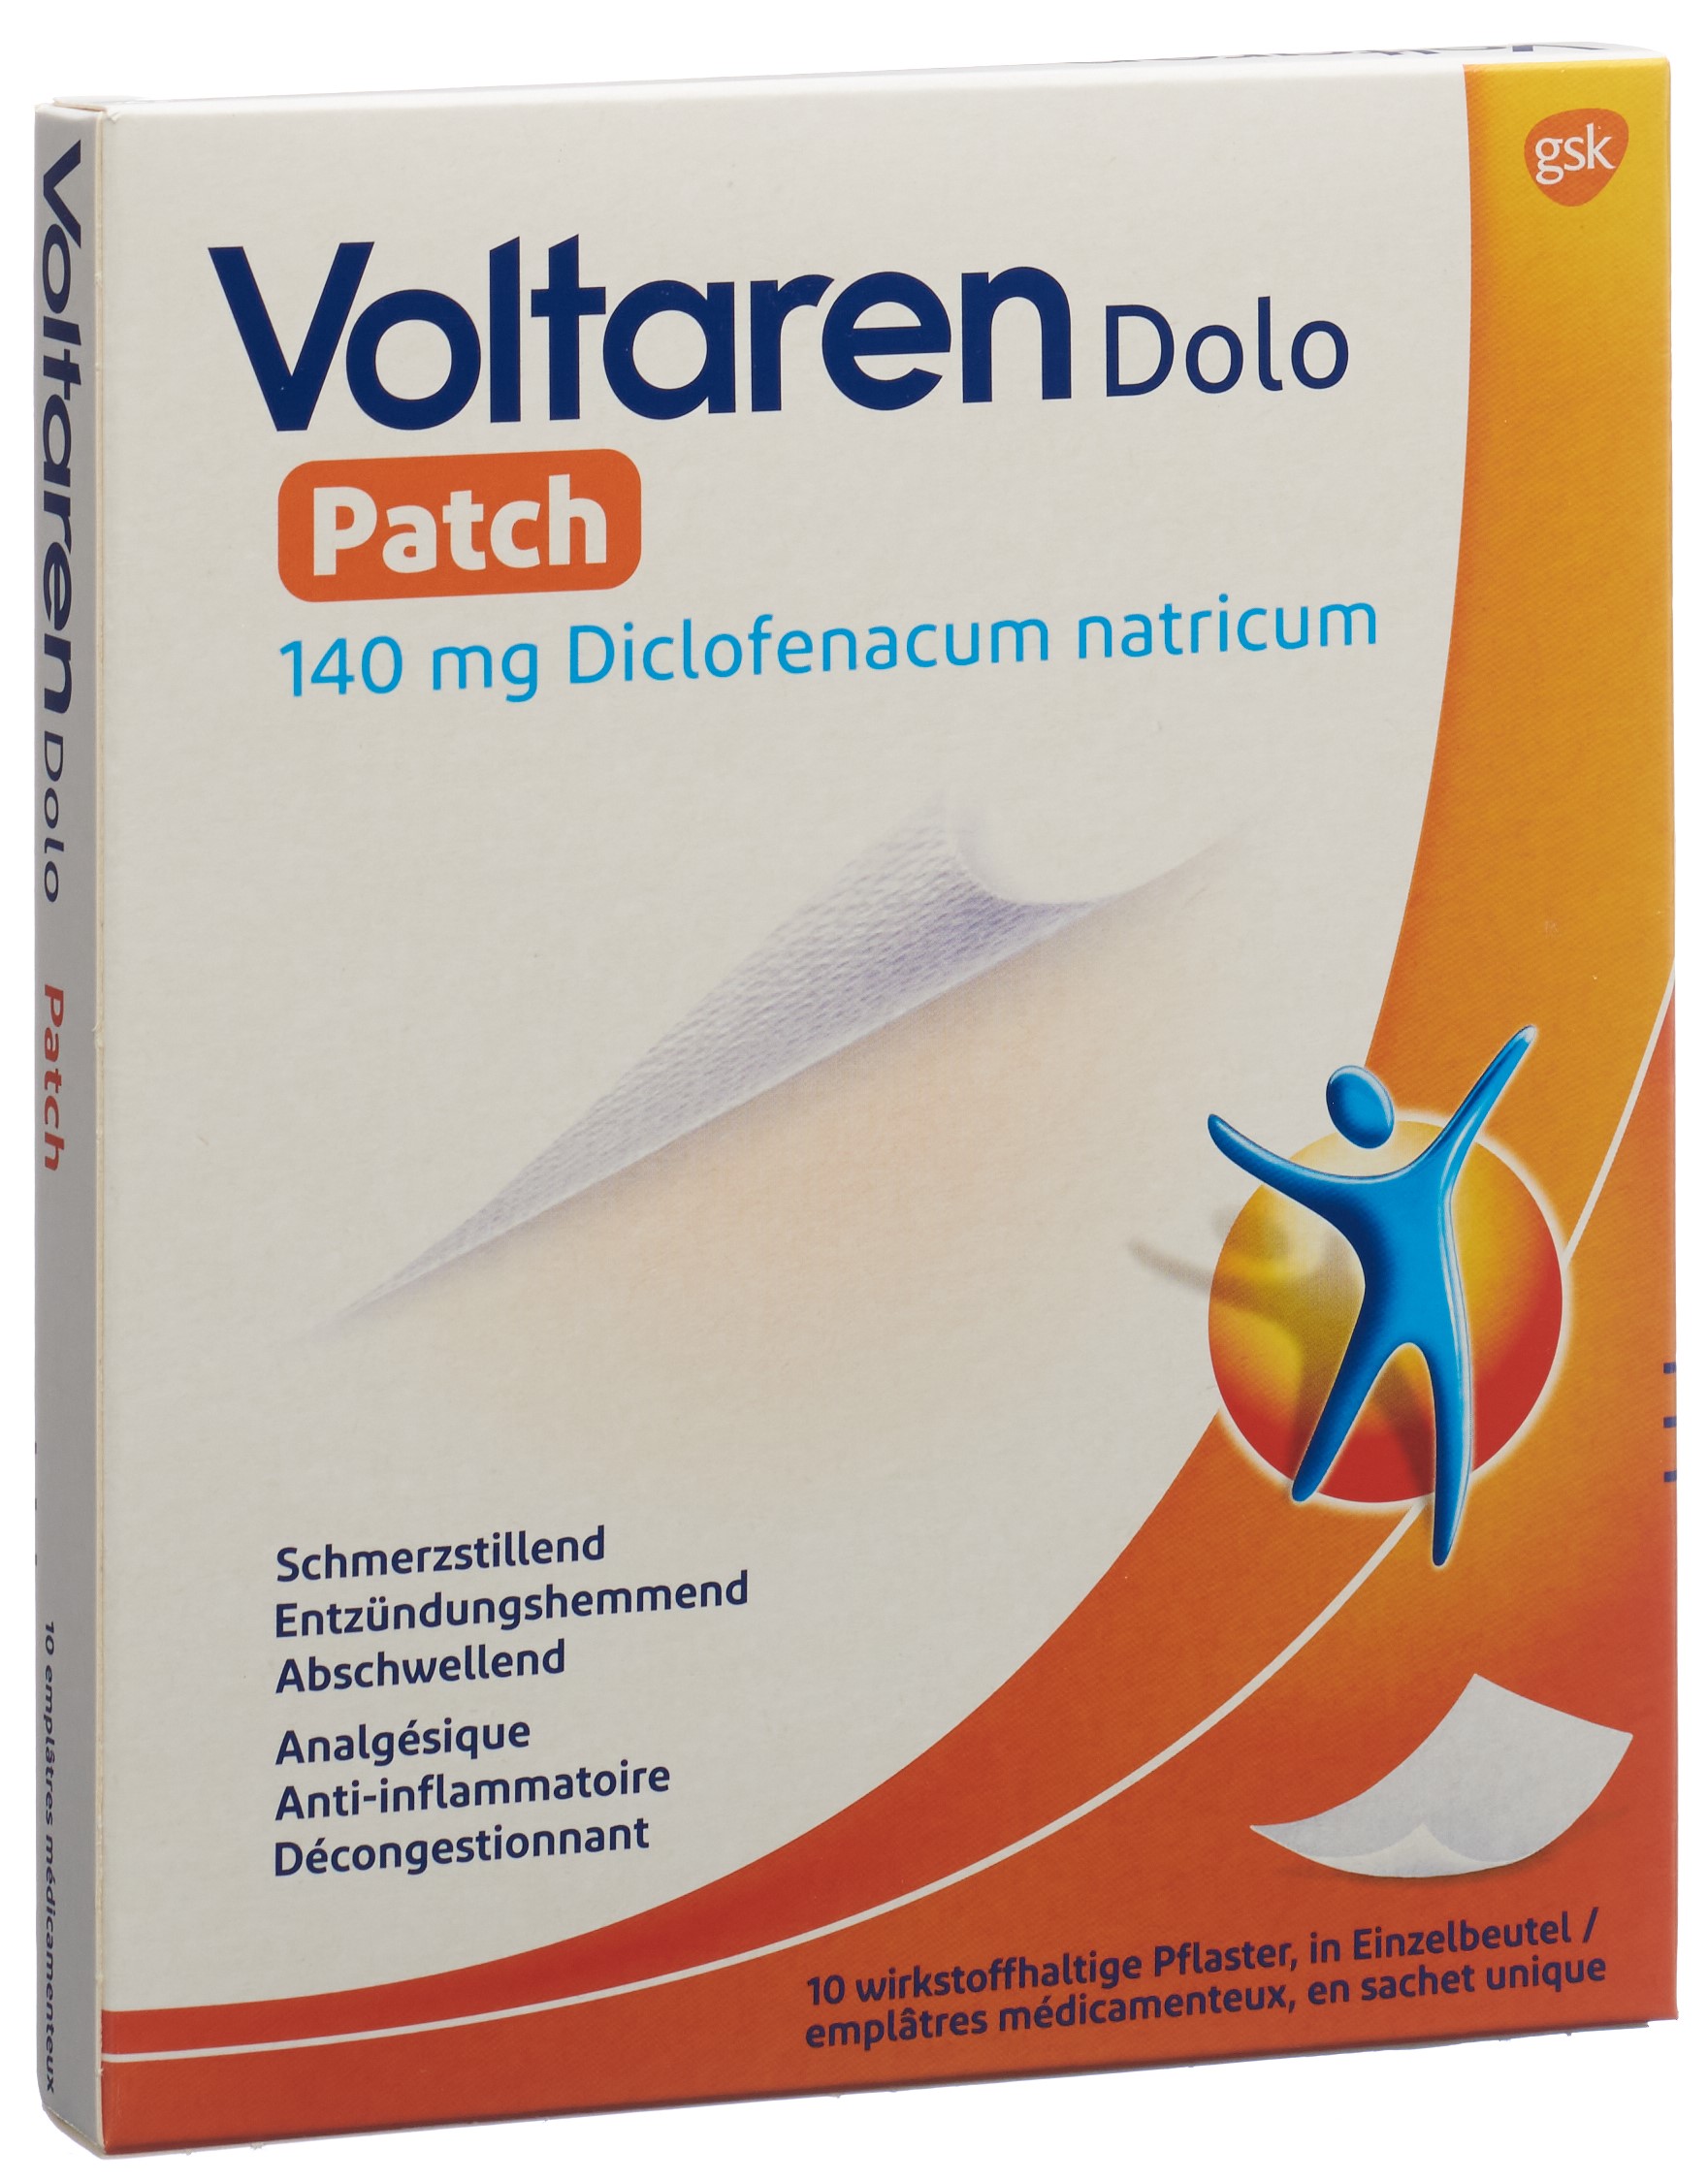 VOLTAREN DOLO Patch Pfl 140 mg Btl 10 Stk